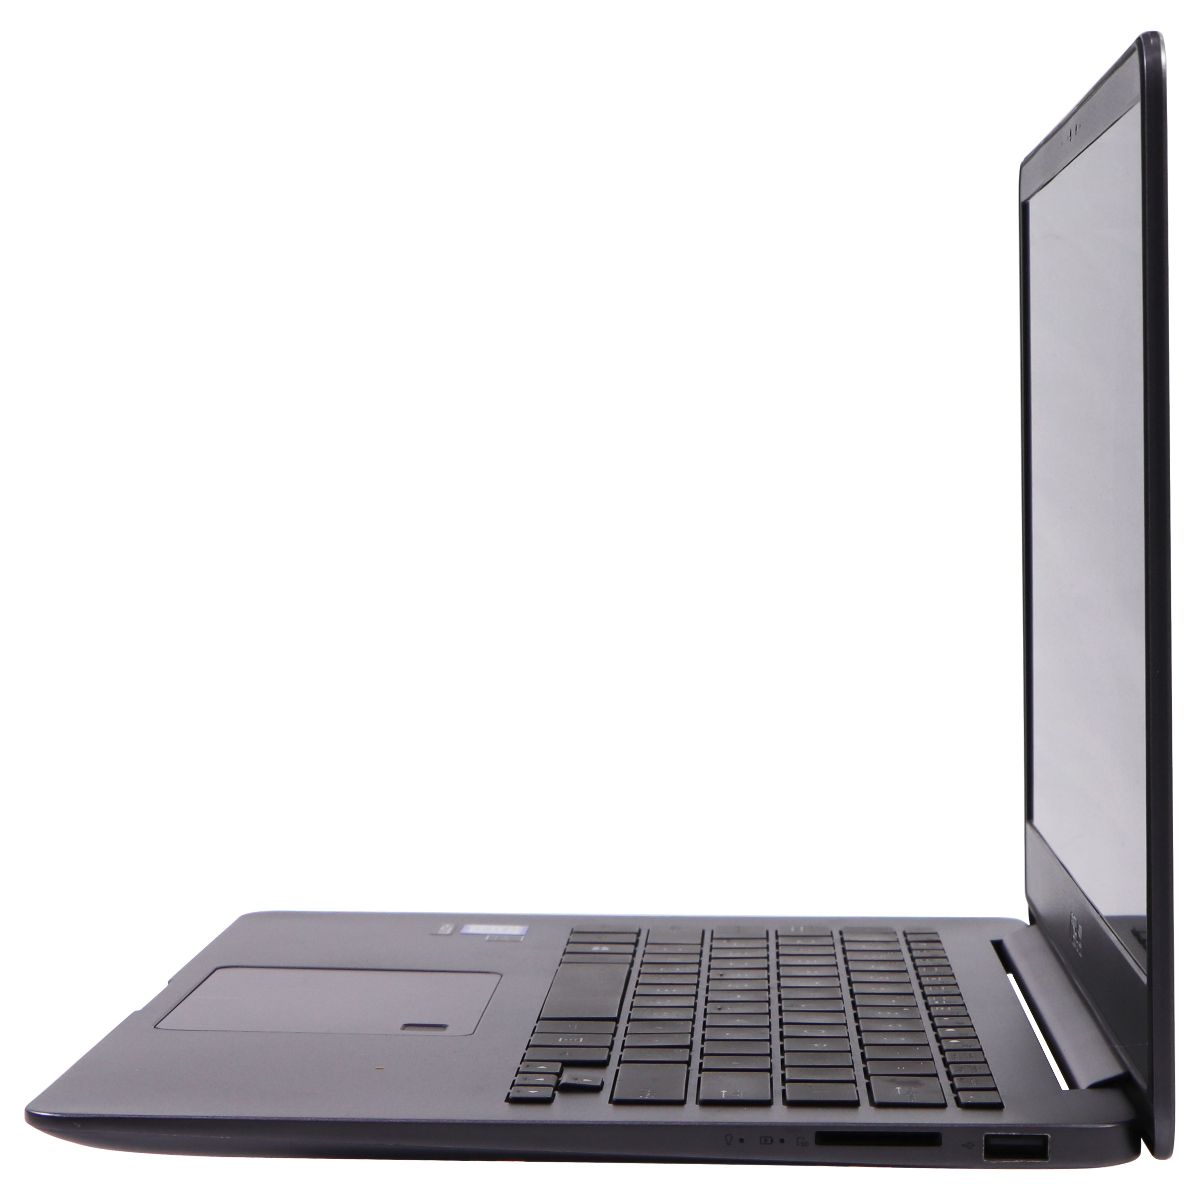 ASUS Zenbook (14-inch) Laptop i7-8550U/16GB RAM/2TB SSD - Quartz Grey (UX430V) Laptops - PC Laptops & Netbooks ASUS    - Simple Cell Bulk Wholesale Pricing - USA Seller